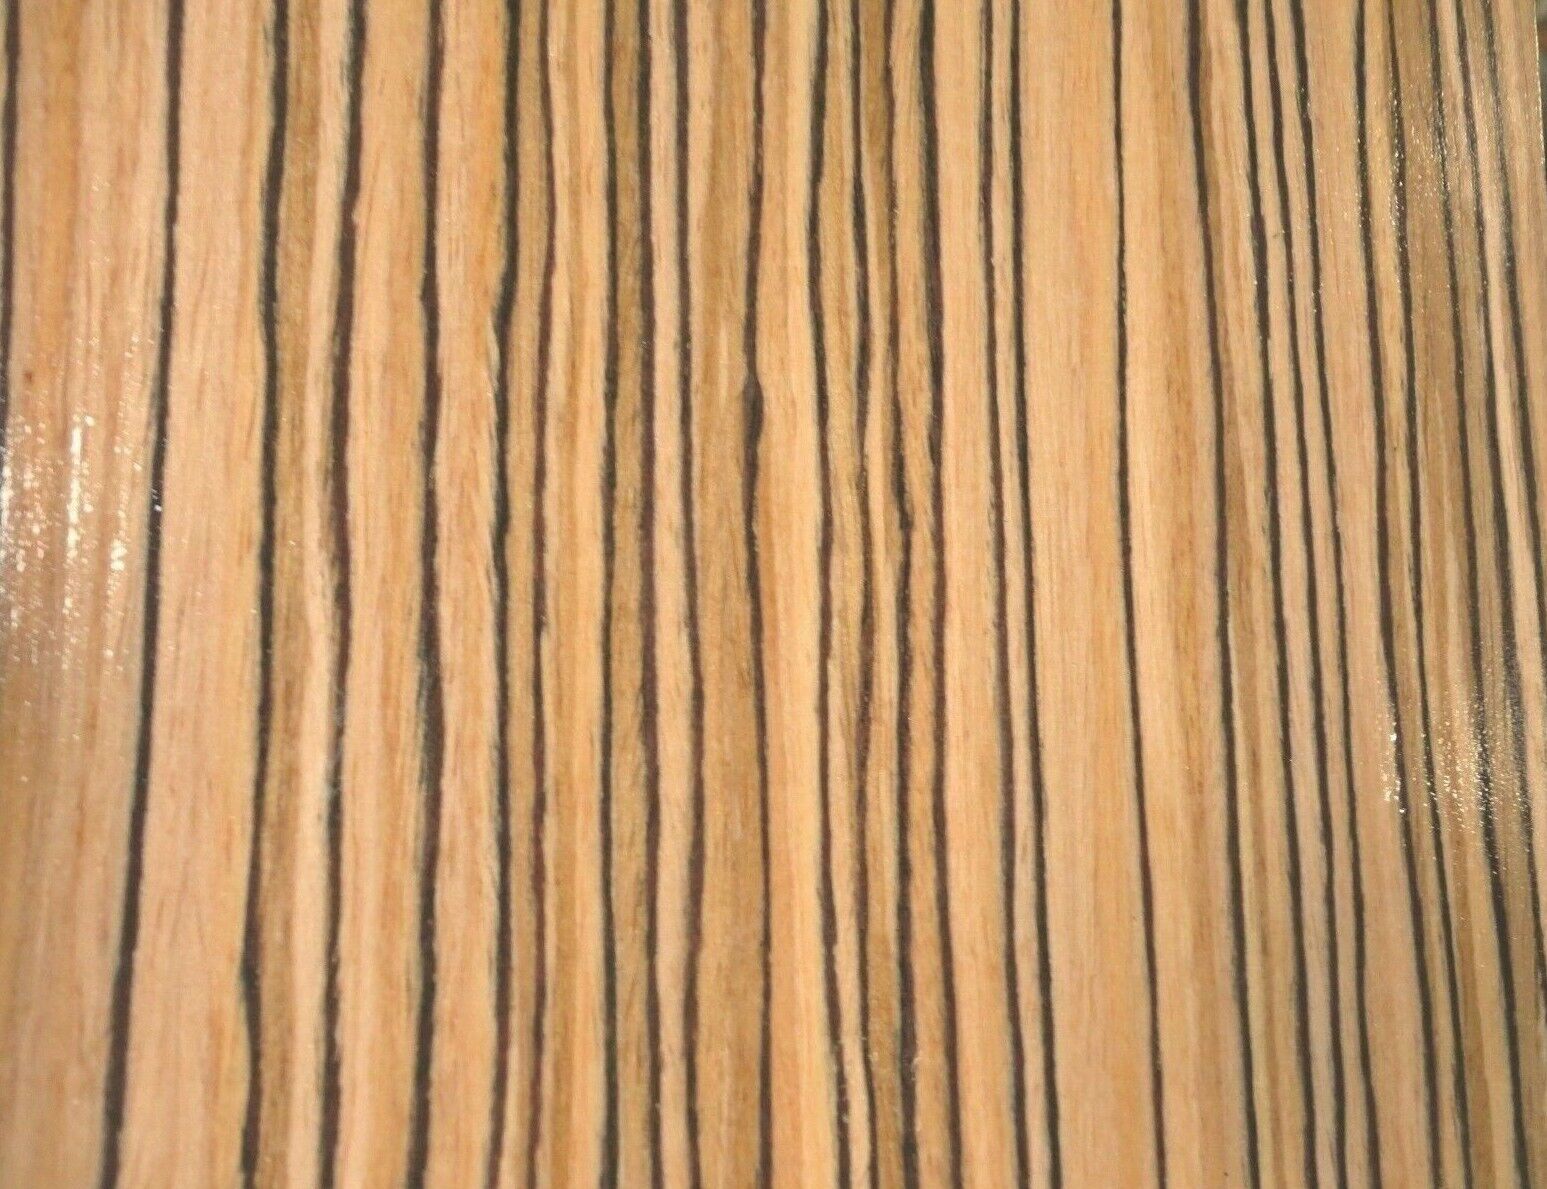 Las Vegas Mall Zebrawood wood veneer composite 24